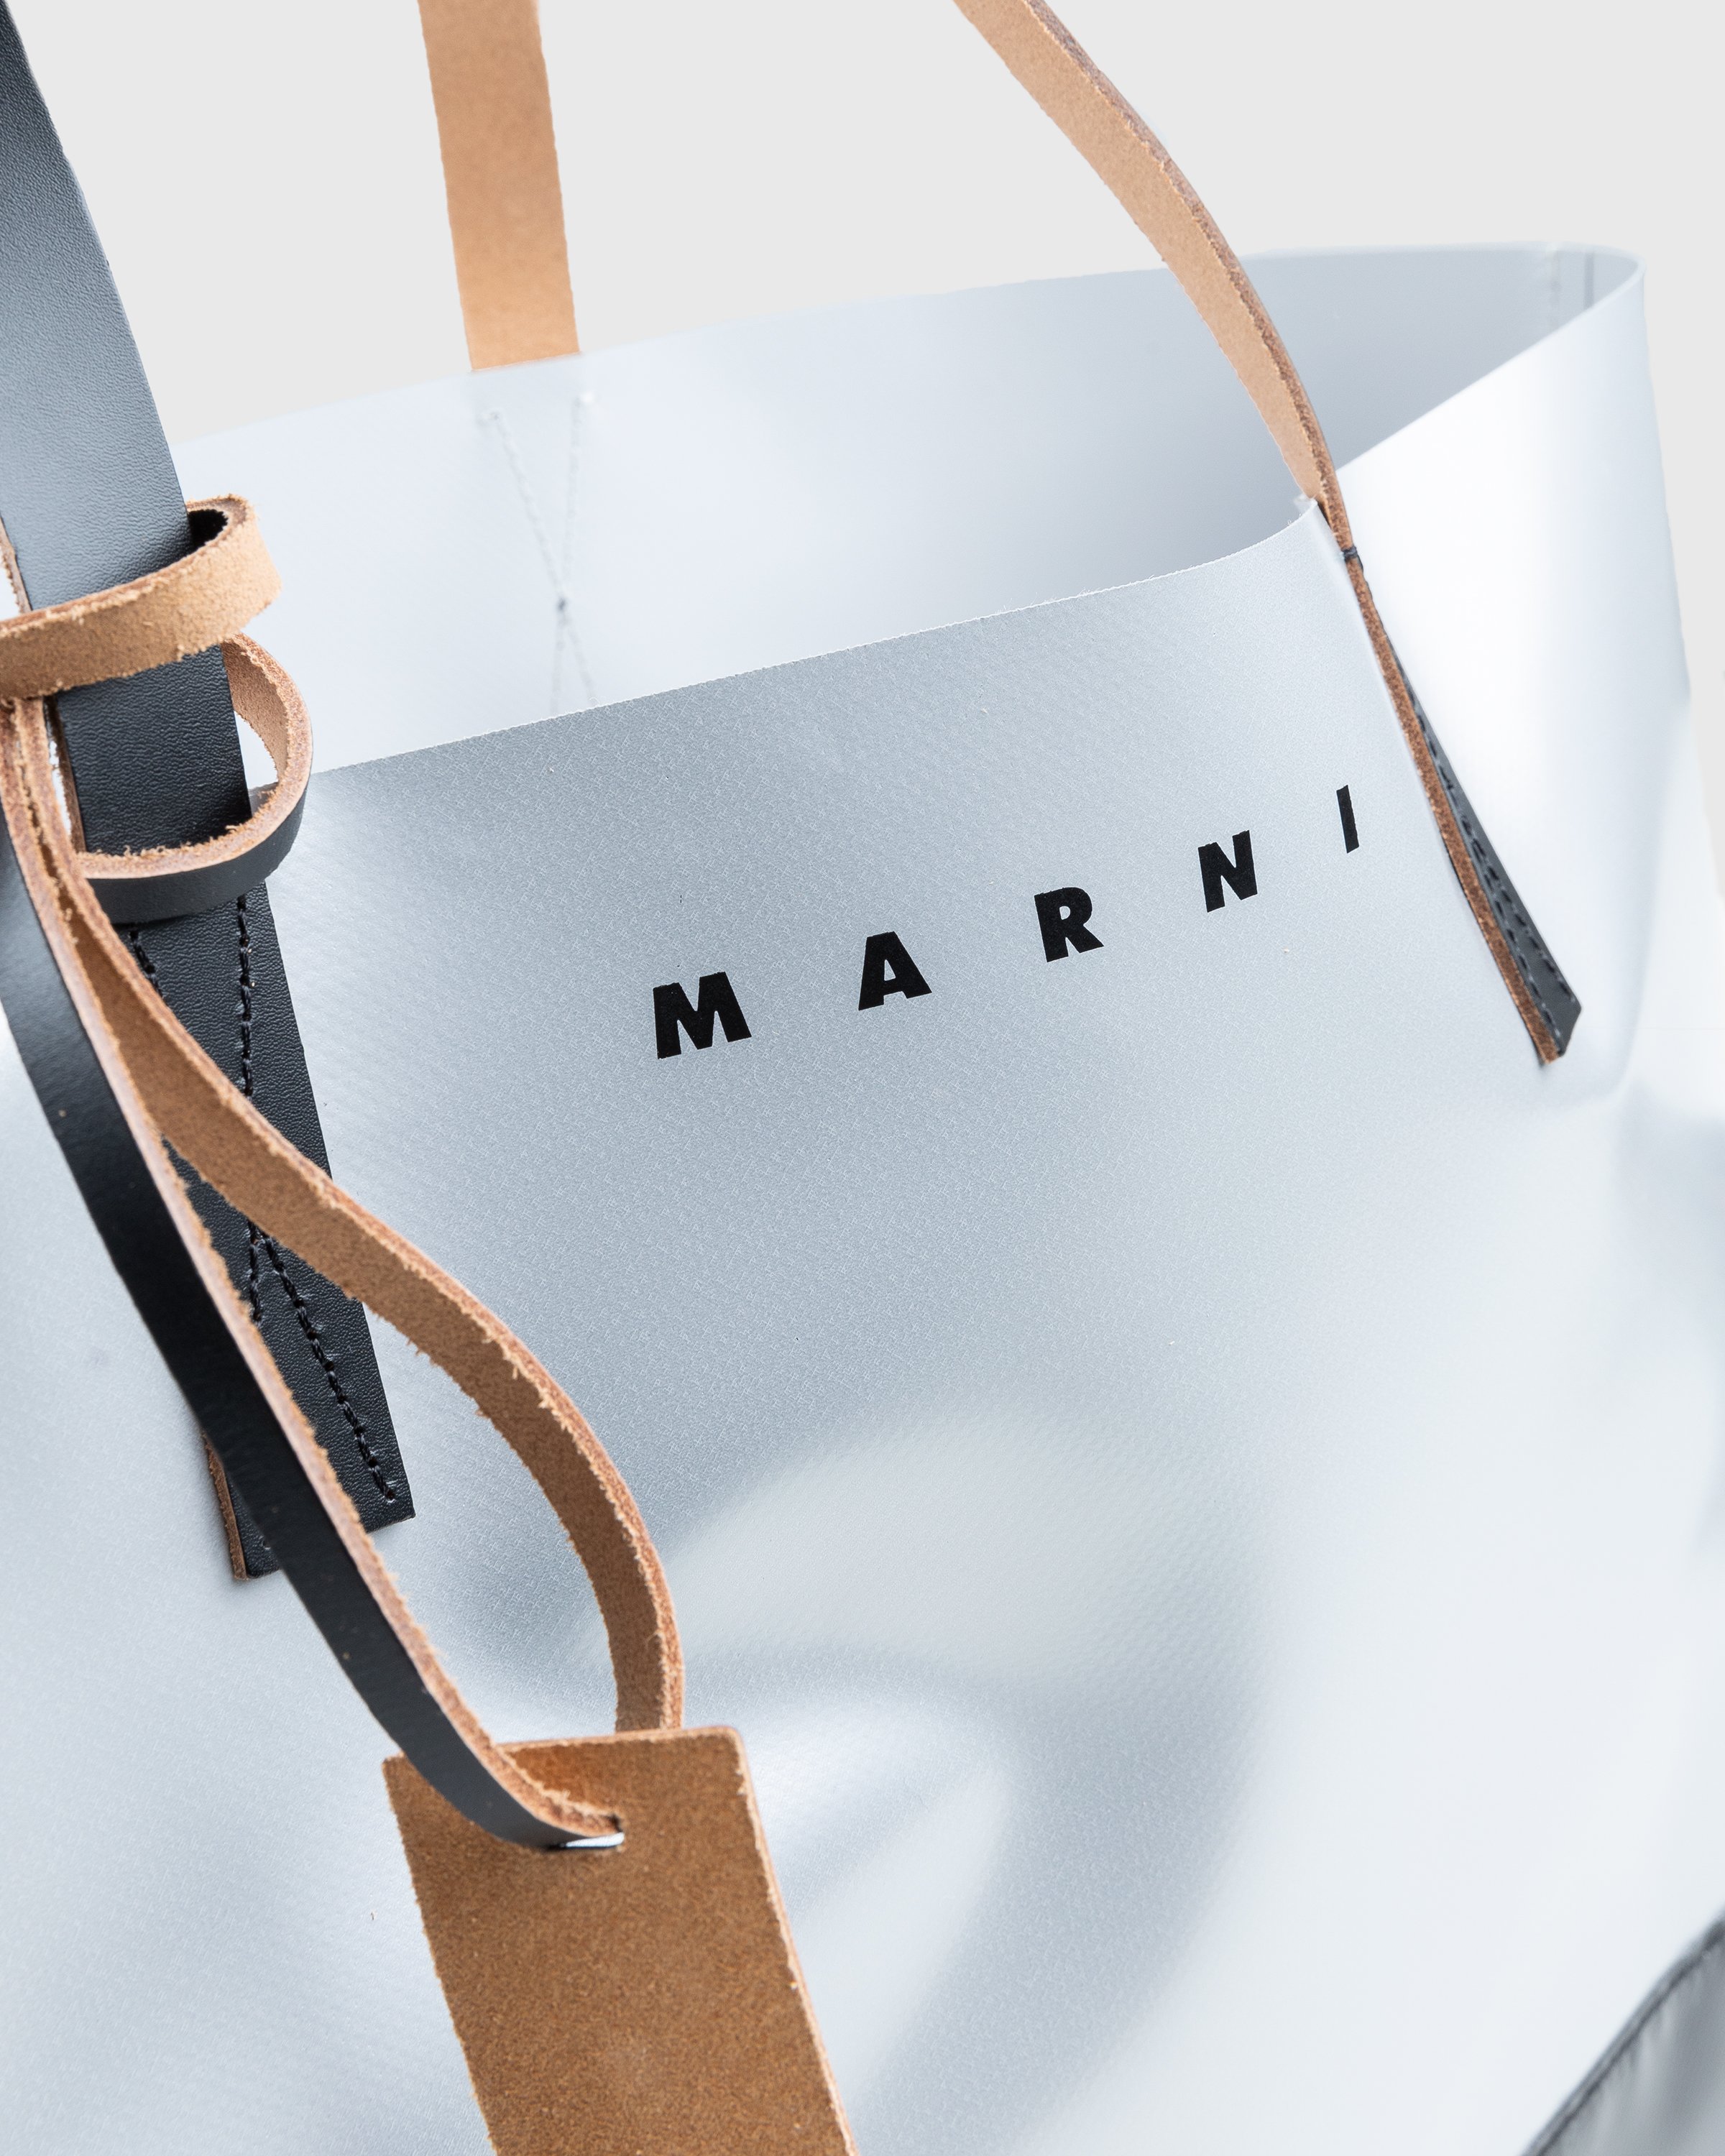 Marni - Tribeca Two-Tone Tote Bag Light Grey - Accessories - Multi - Image 6